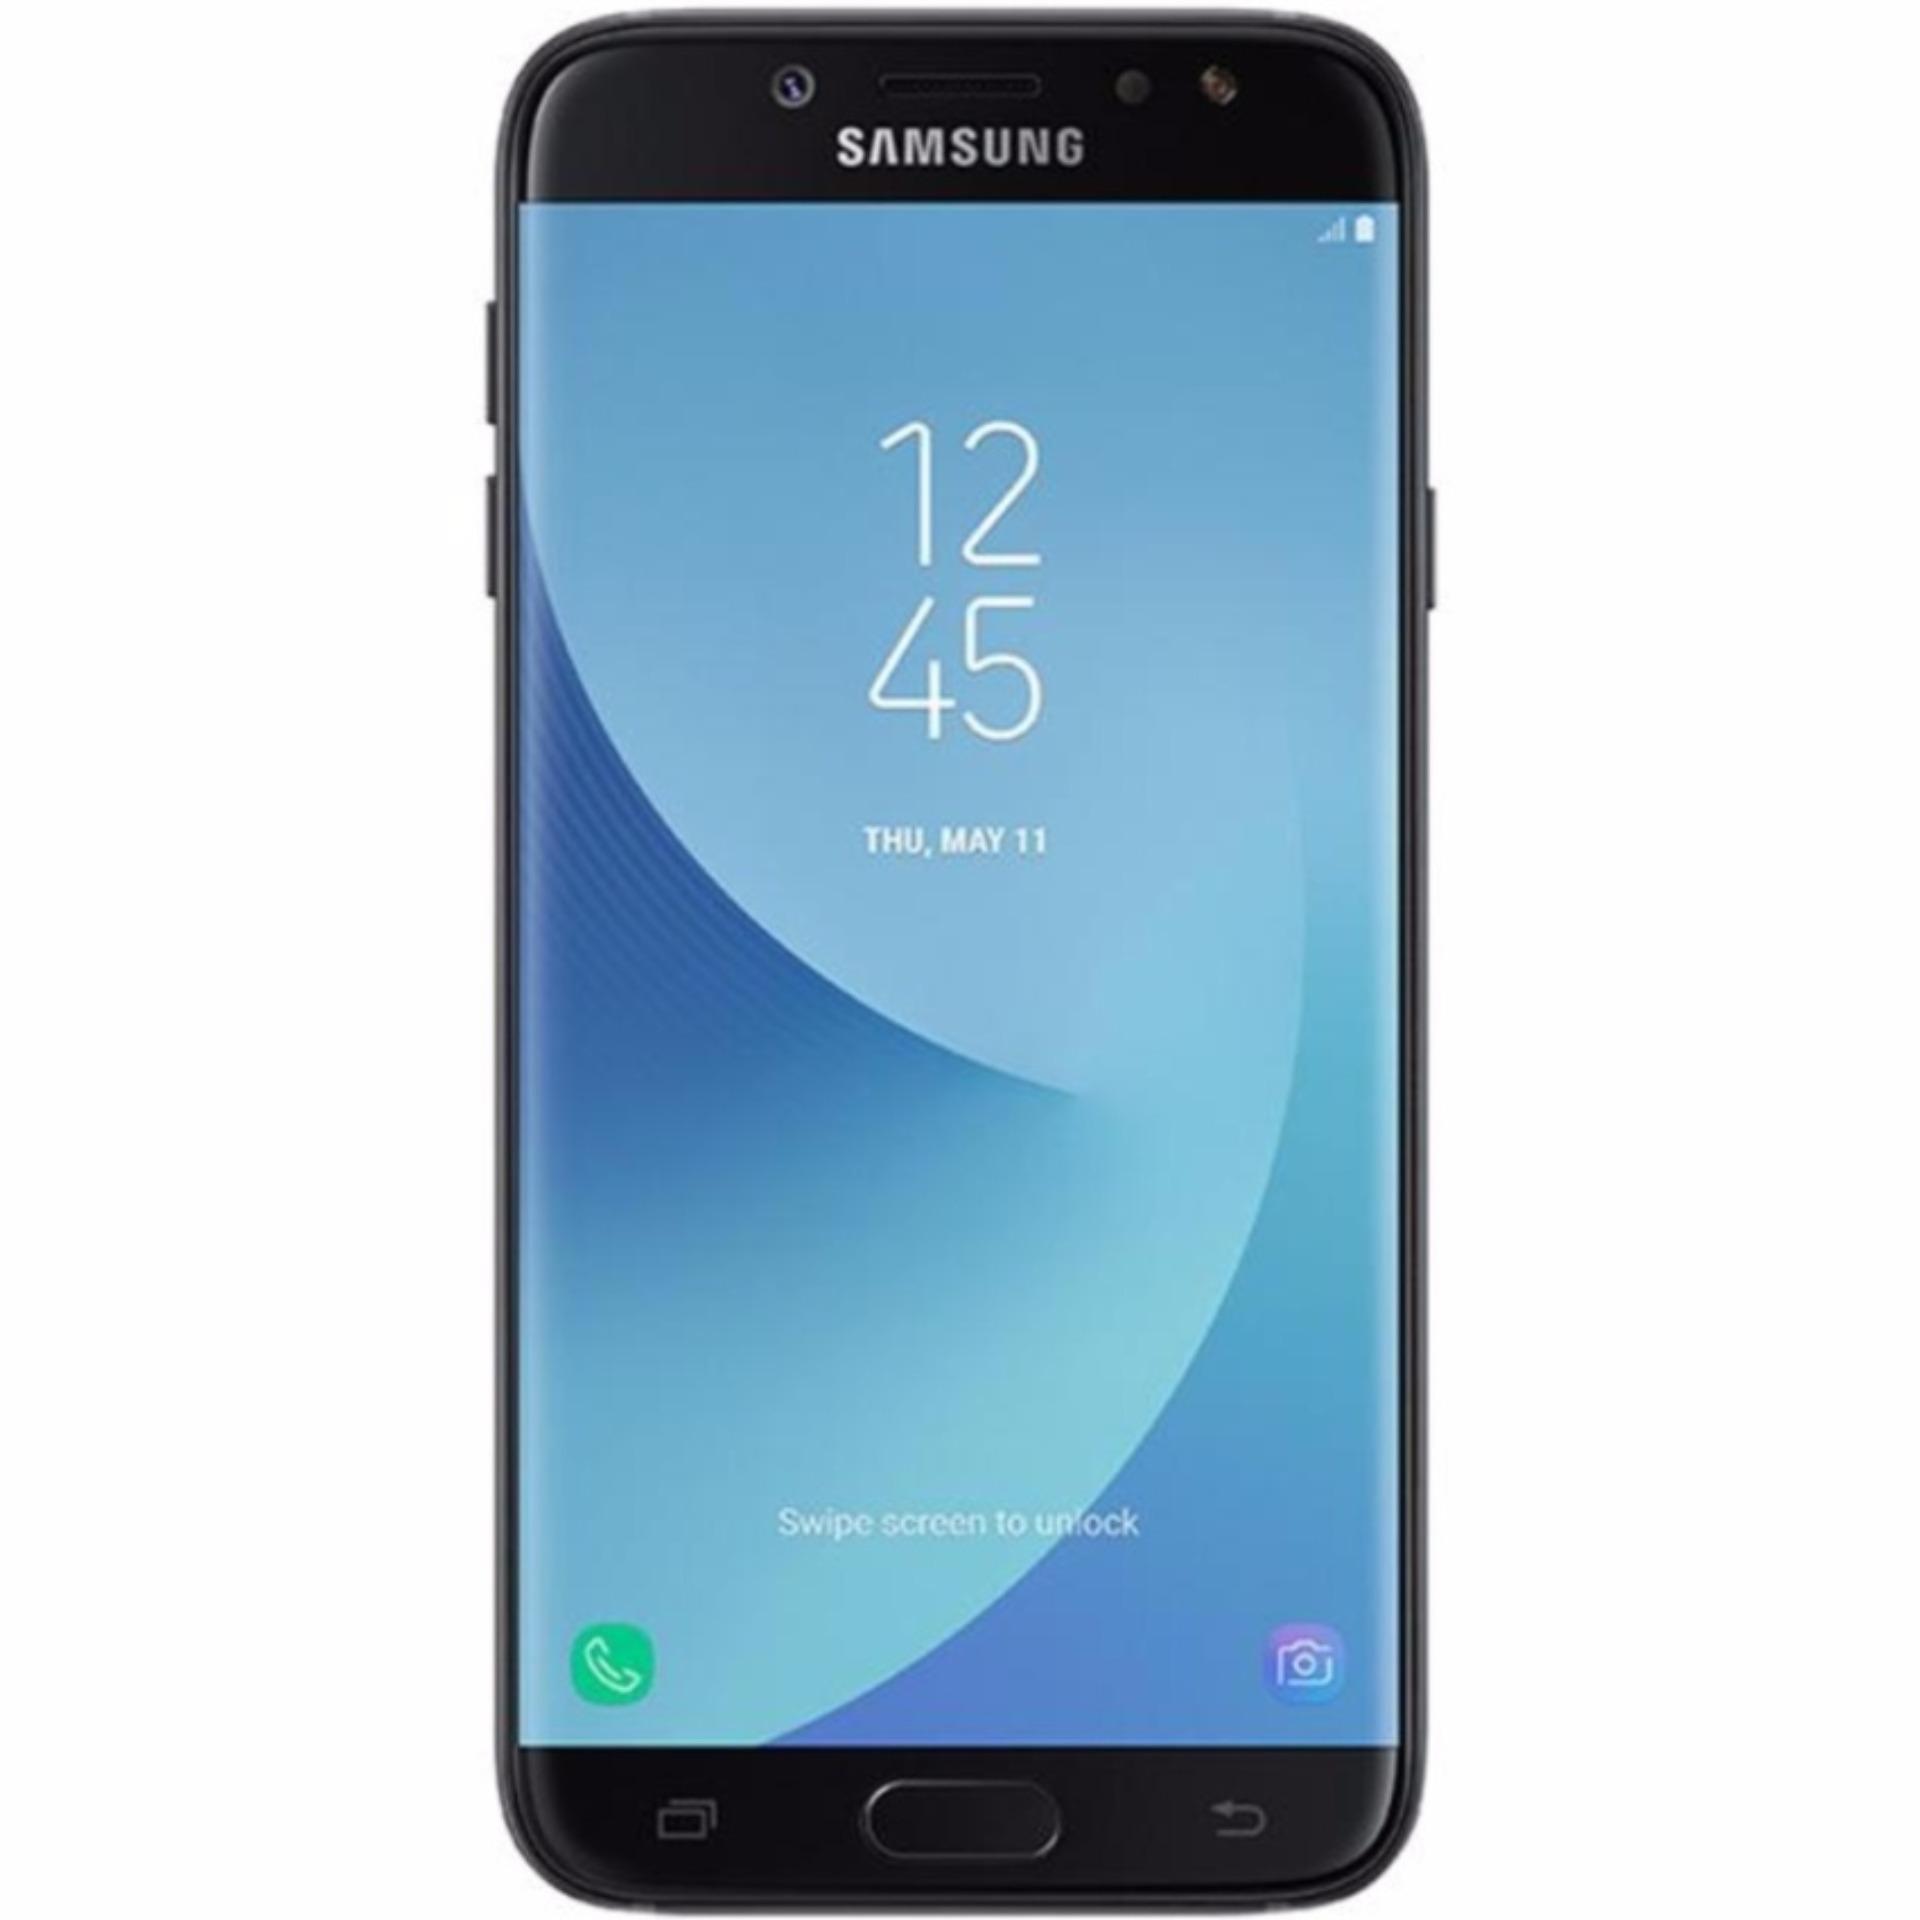 Samsung Galaxy J7 Pro Smartphone - Black [32 GB/3 GB]